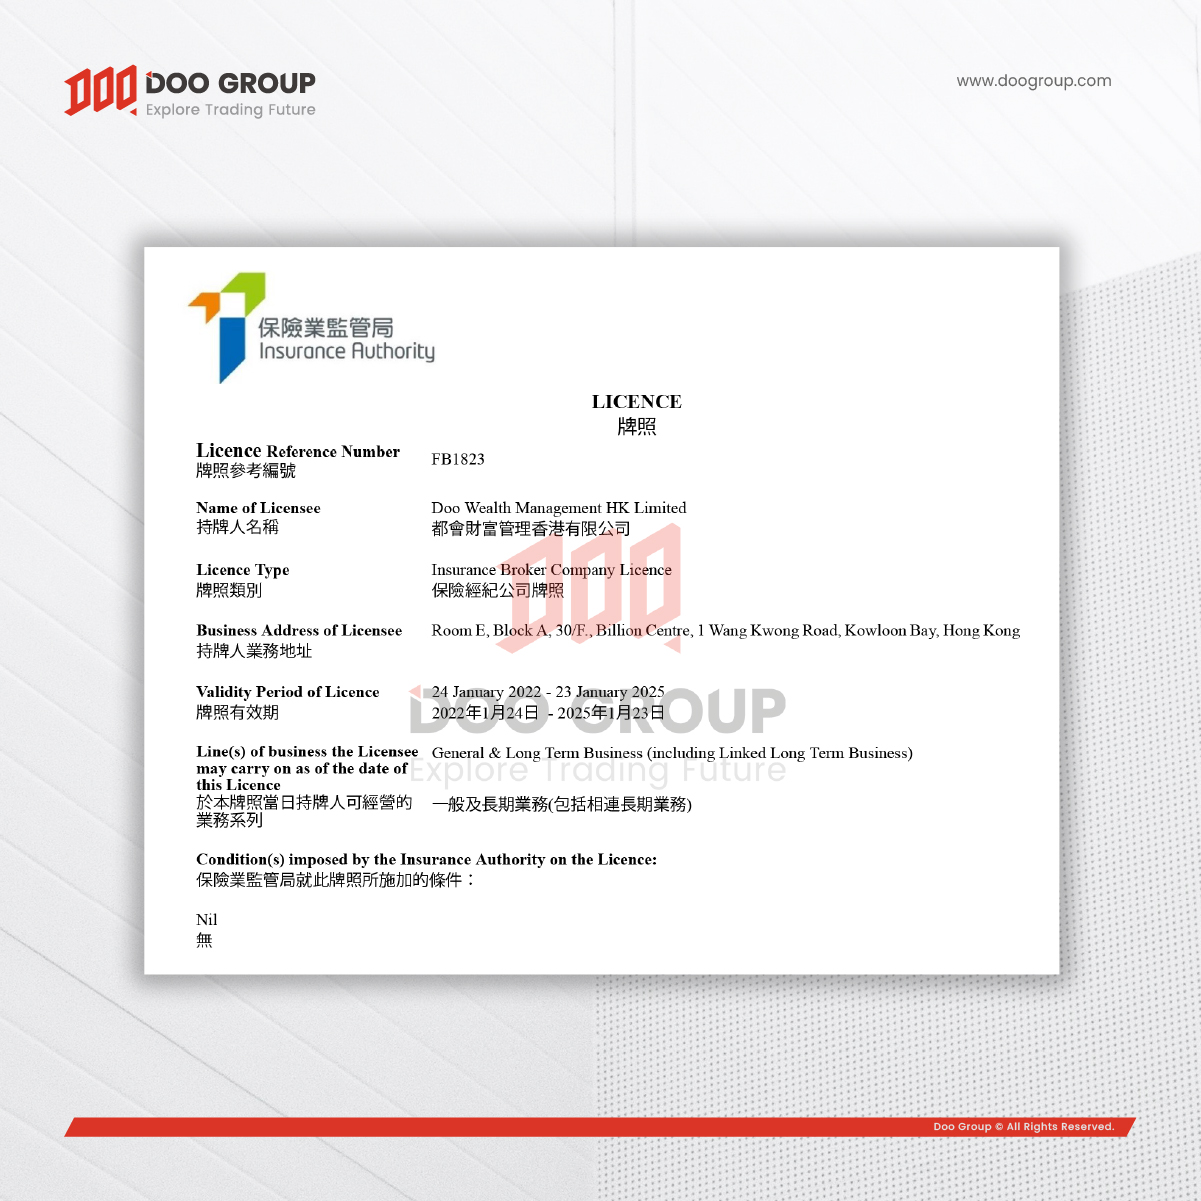 Doo Financial 成功收购受香港保监局监管的持牌保险经纪公司 